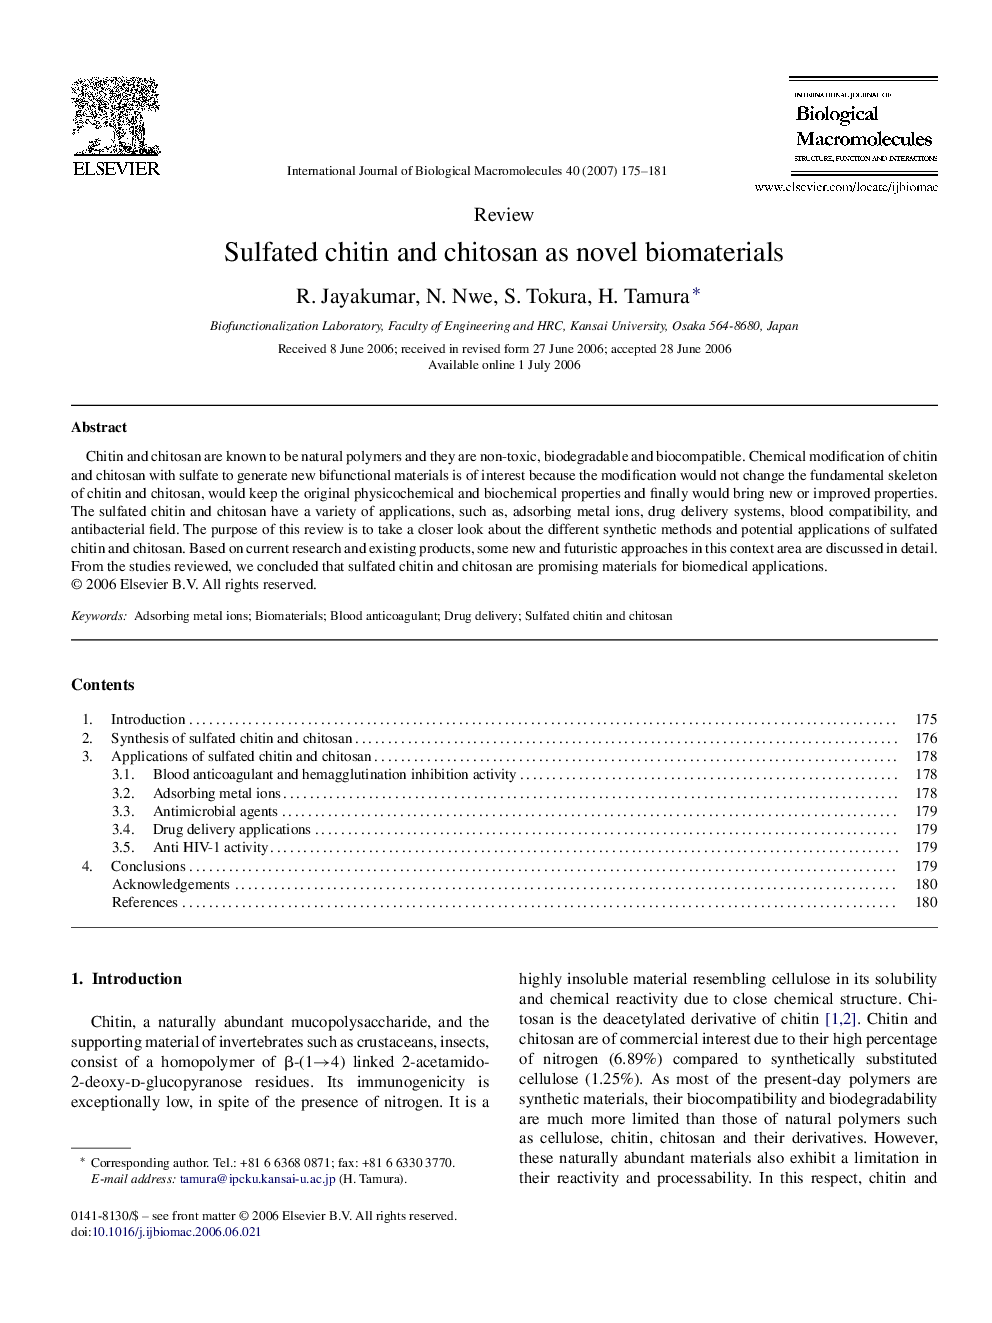 Sulfated chitin and chitosan as novel biomaterials